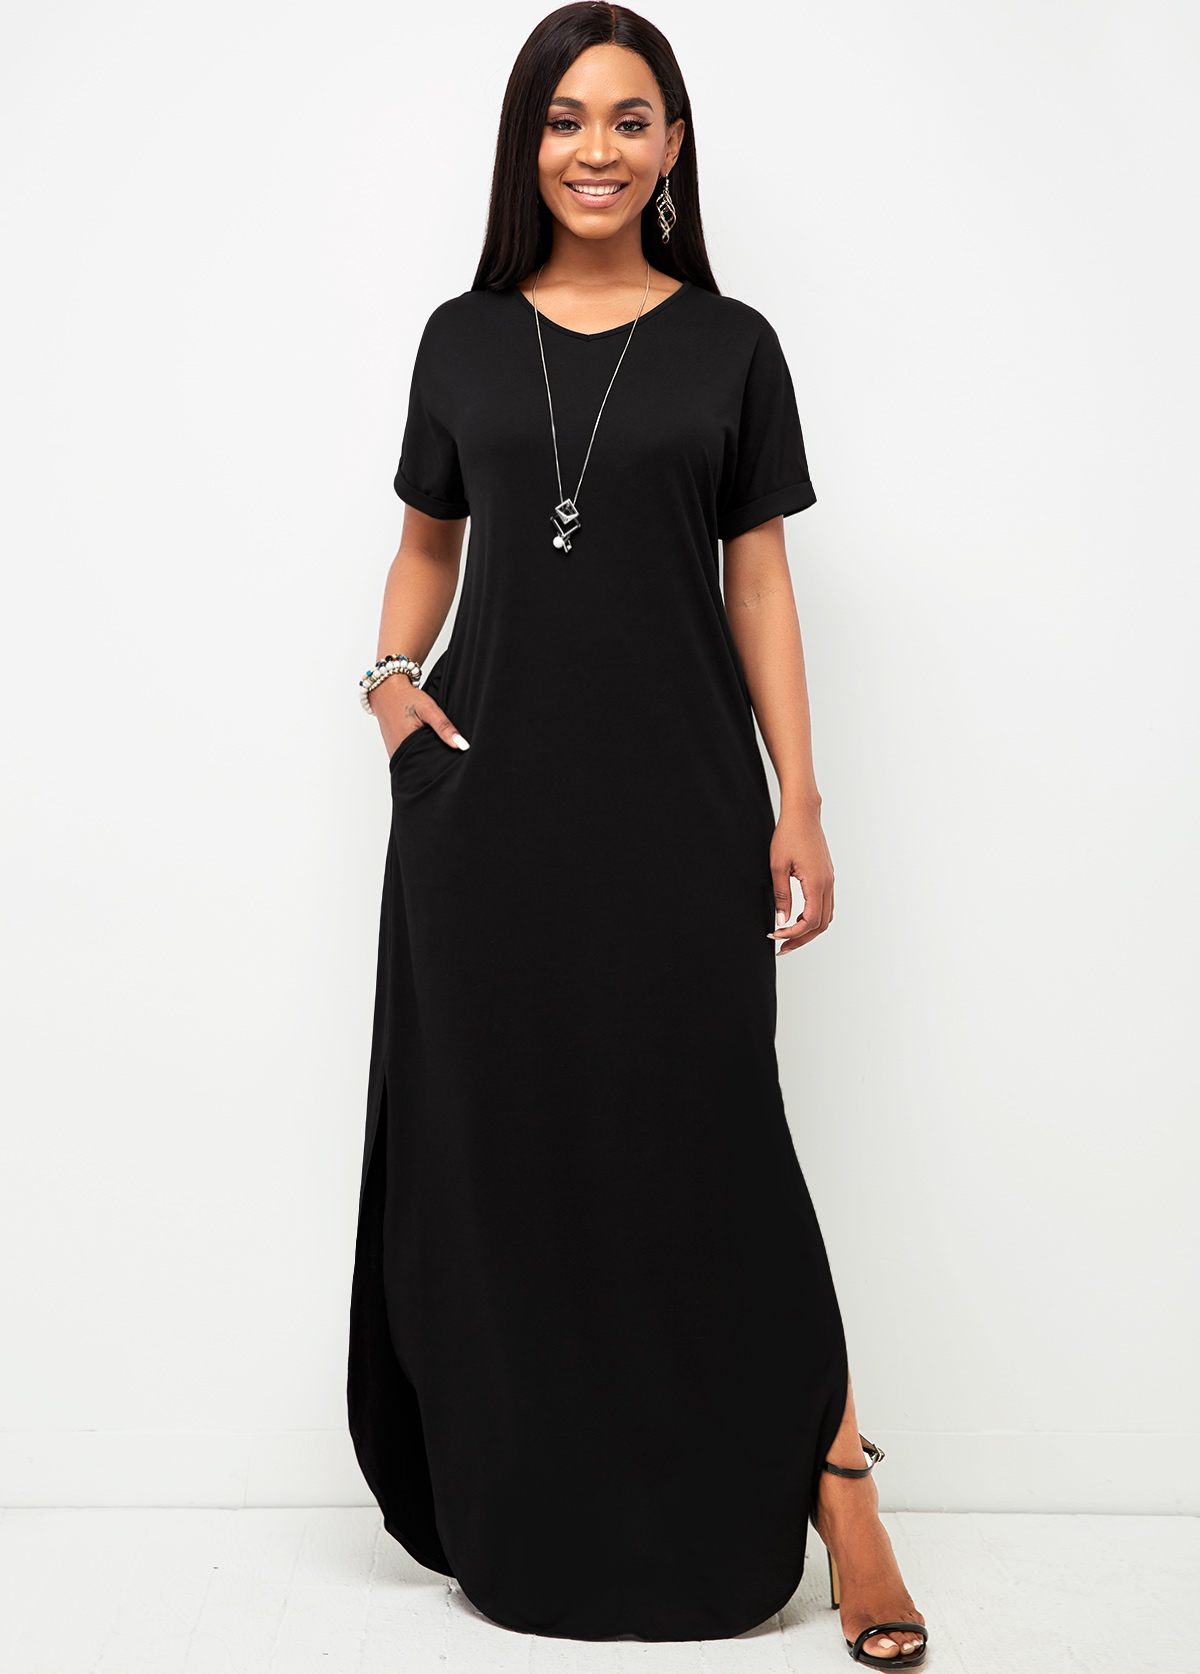 Pocket V Neck Black Casual Dress